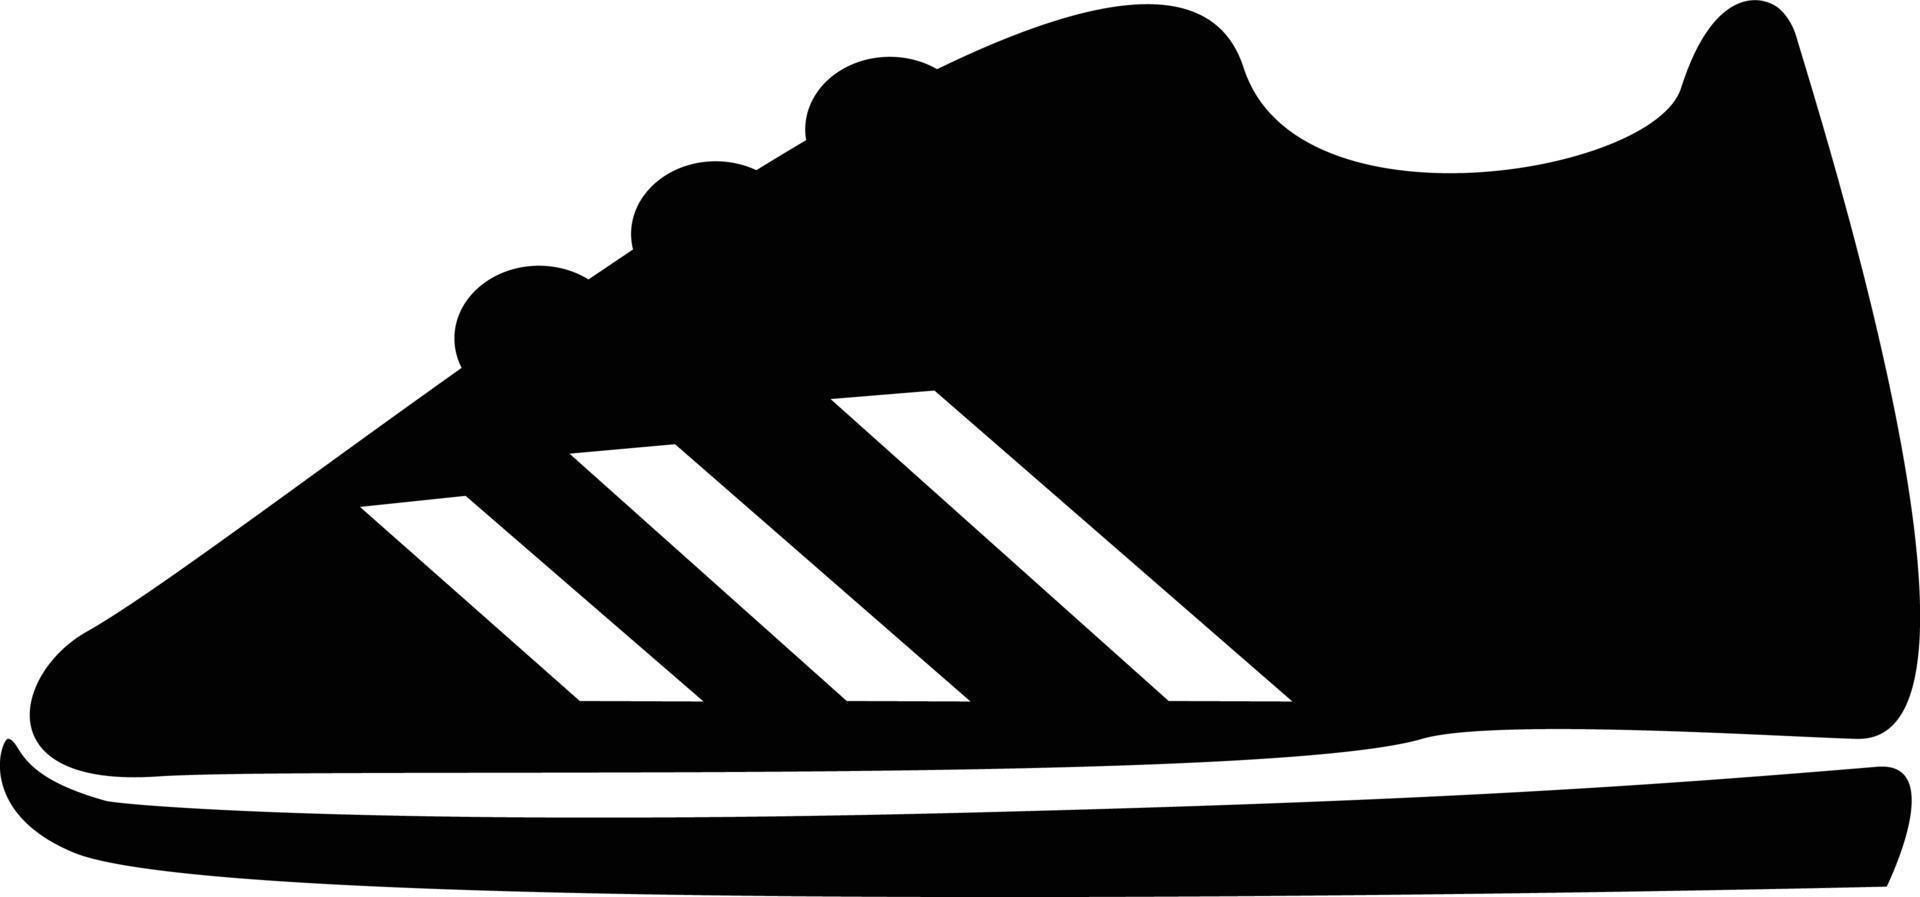 sport sko ikon på vit bakgrund. sko tecken. platt stil. vektor